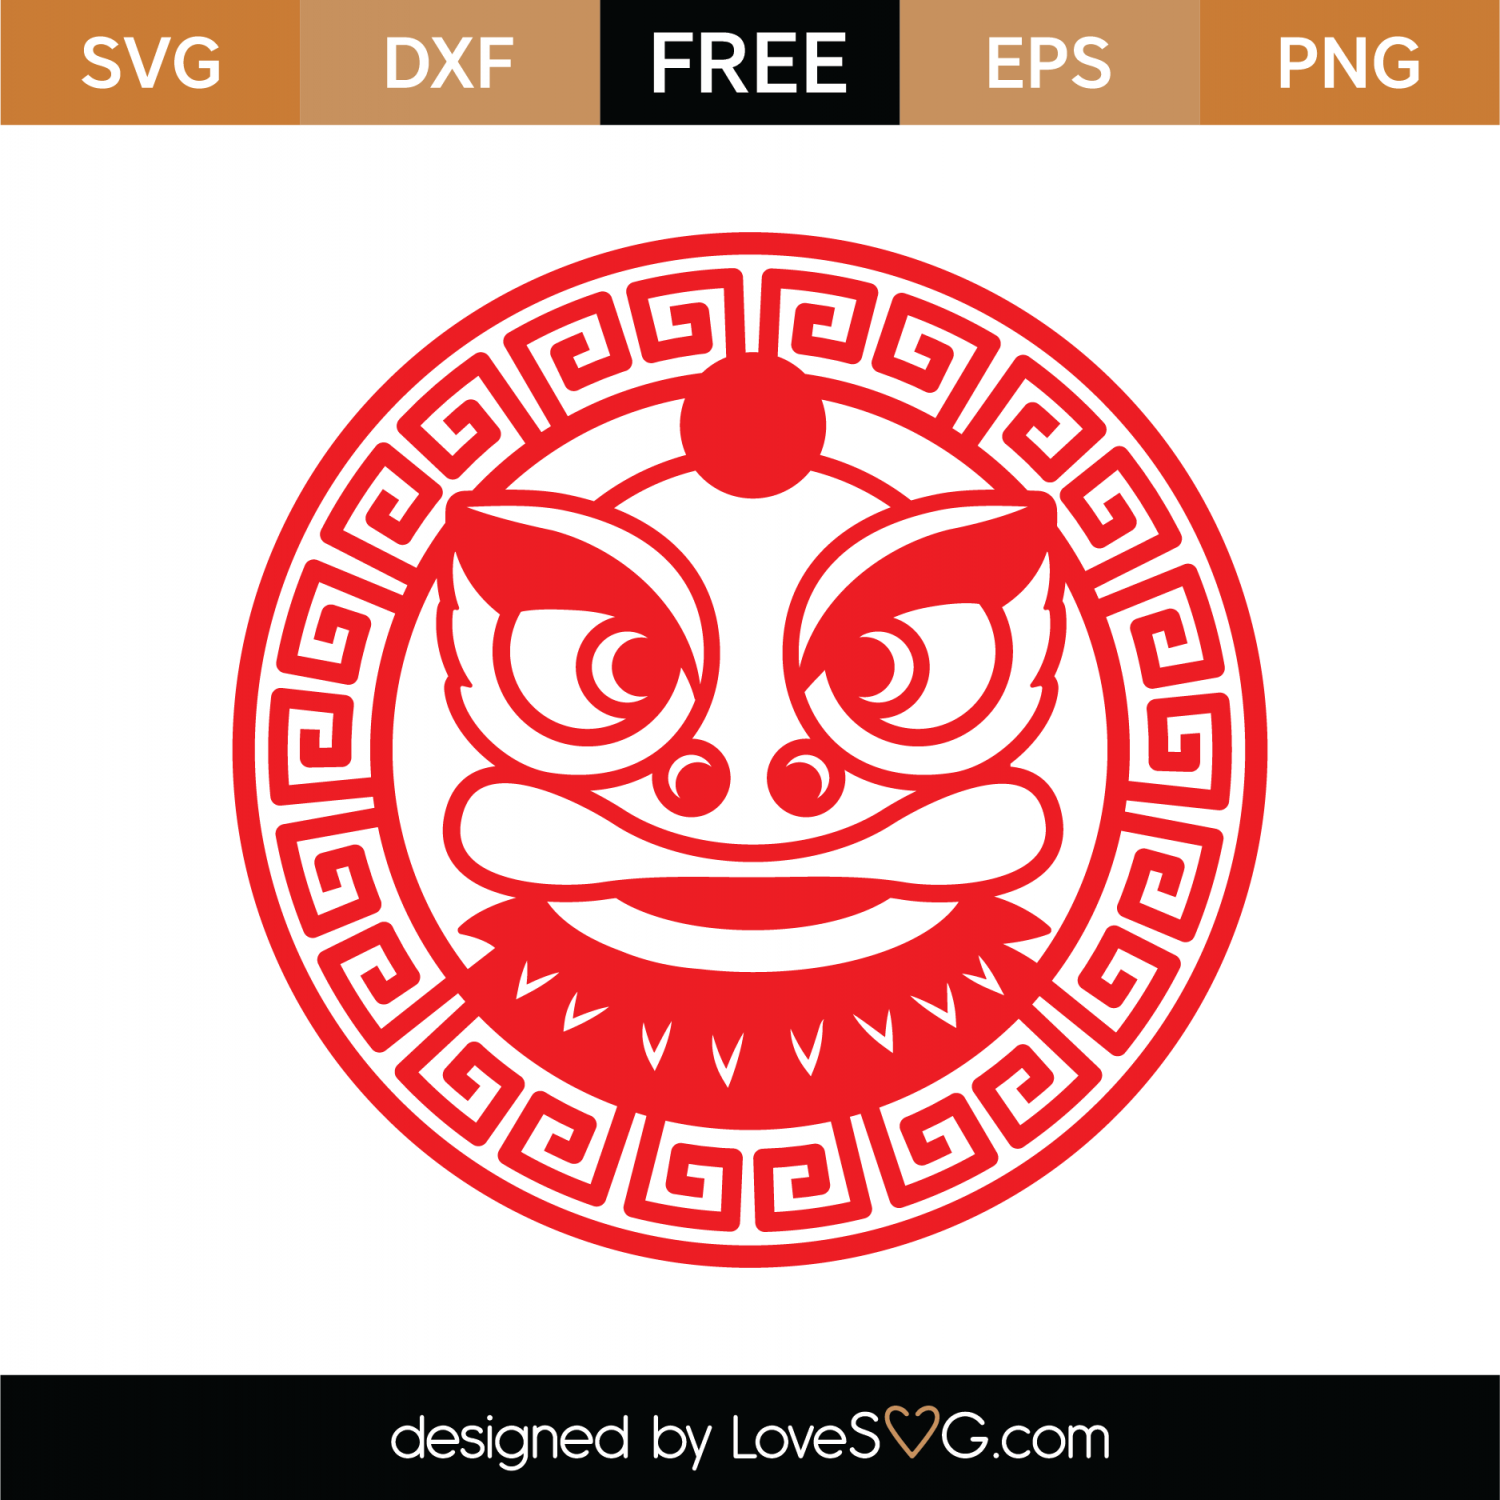 Download Free Chinese Dragon SVG Cut File | Lovesvg.com